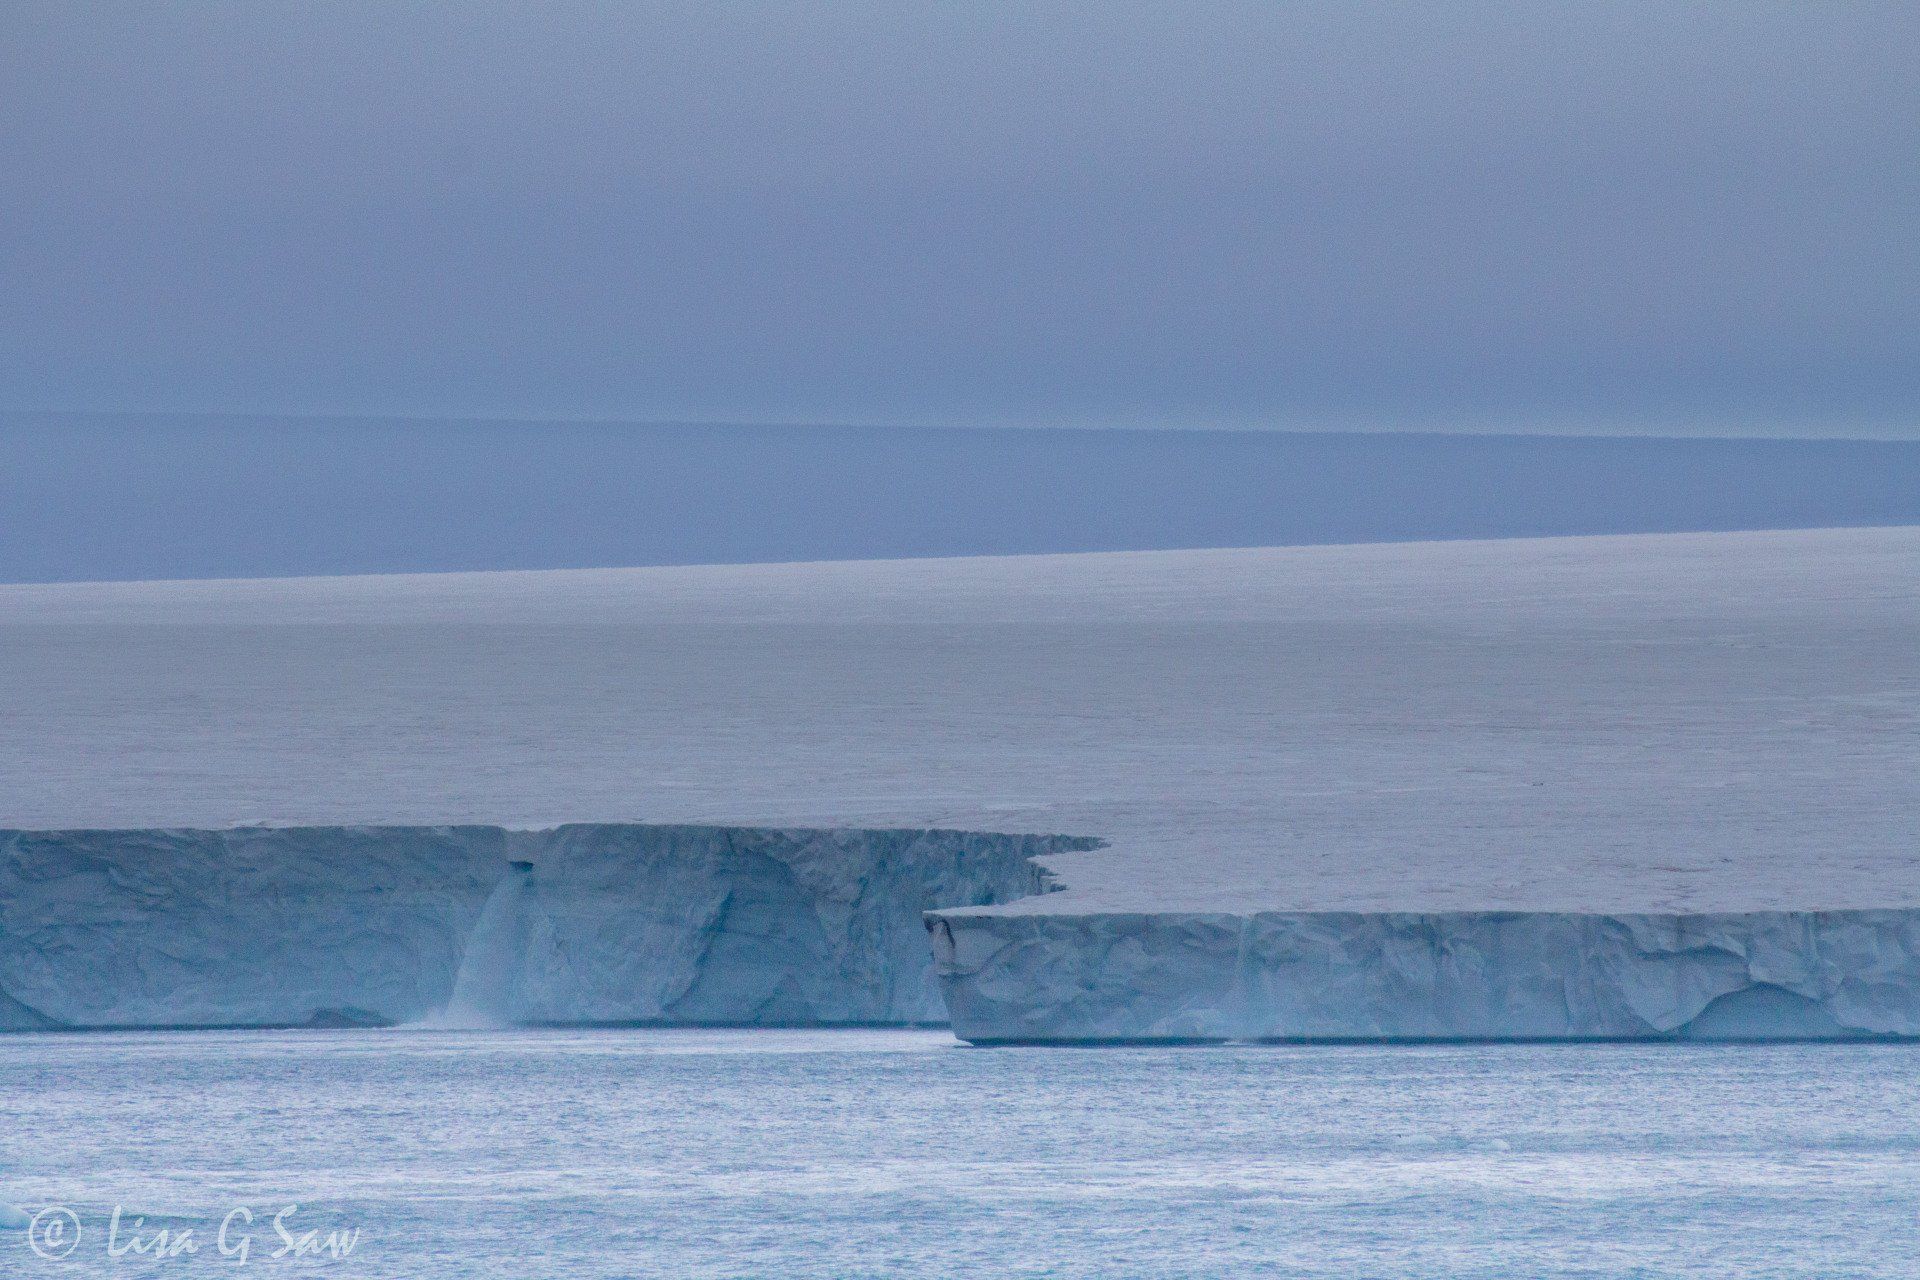 Nordaustlandet Ice shelf